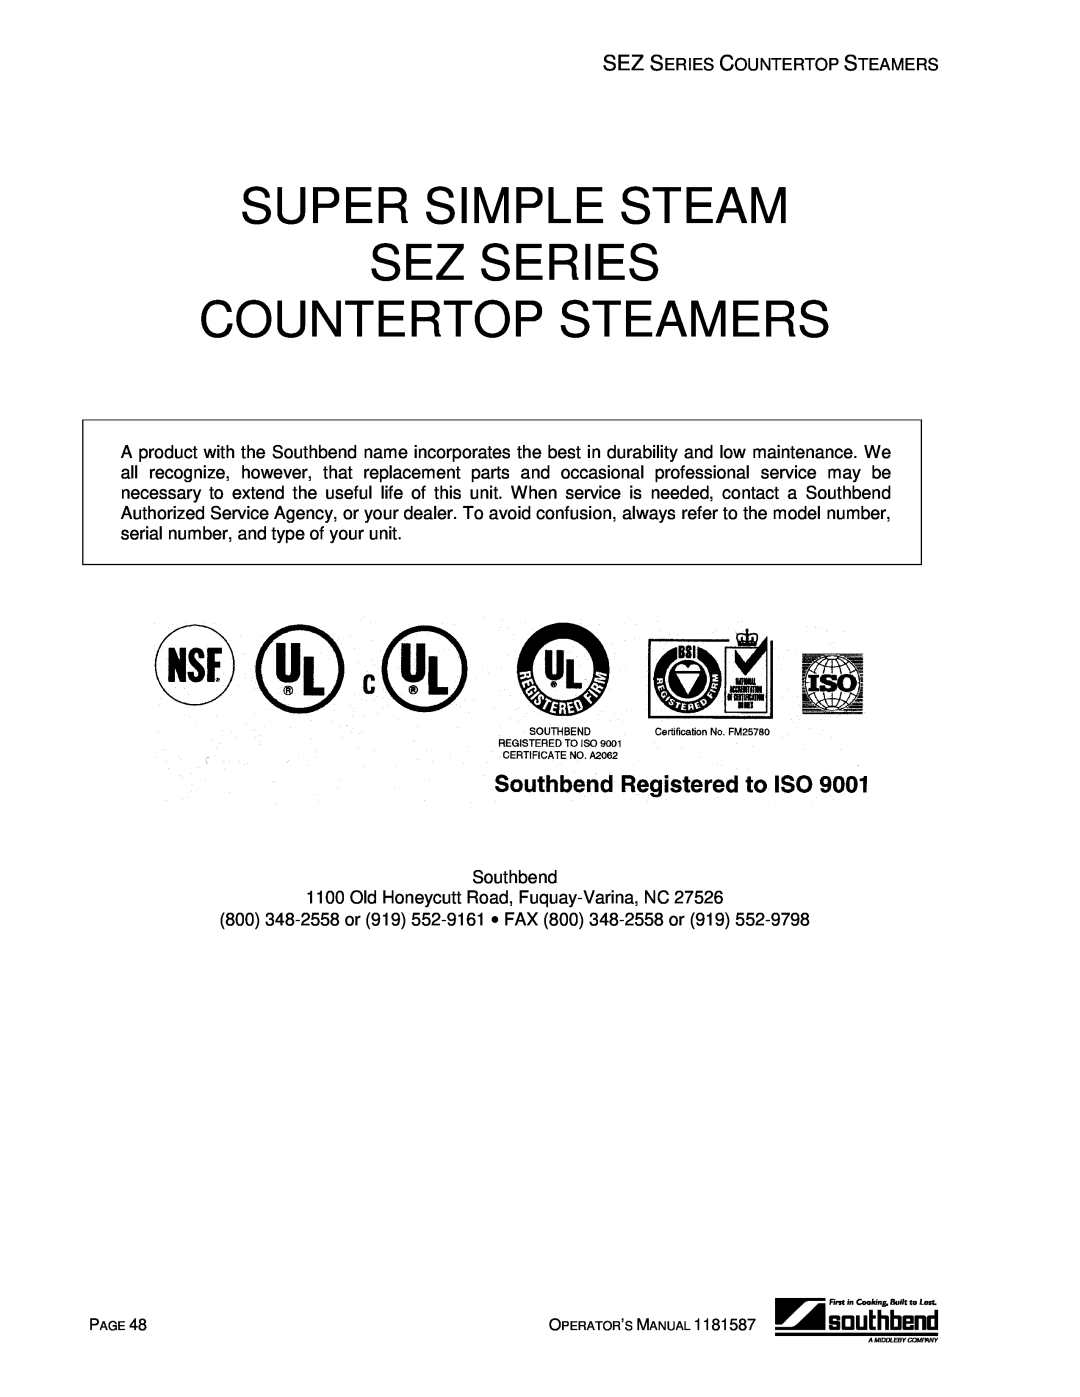 Southbend SEZ-5, SEZ-3 manual Super Simple Steam Sez Series Countertop Steamers 